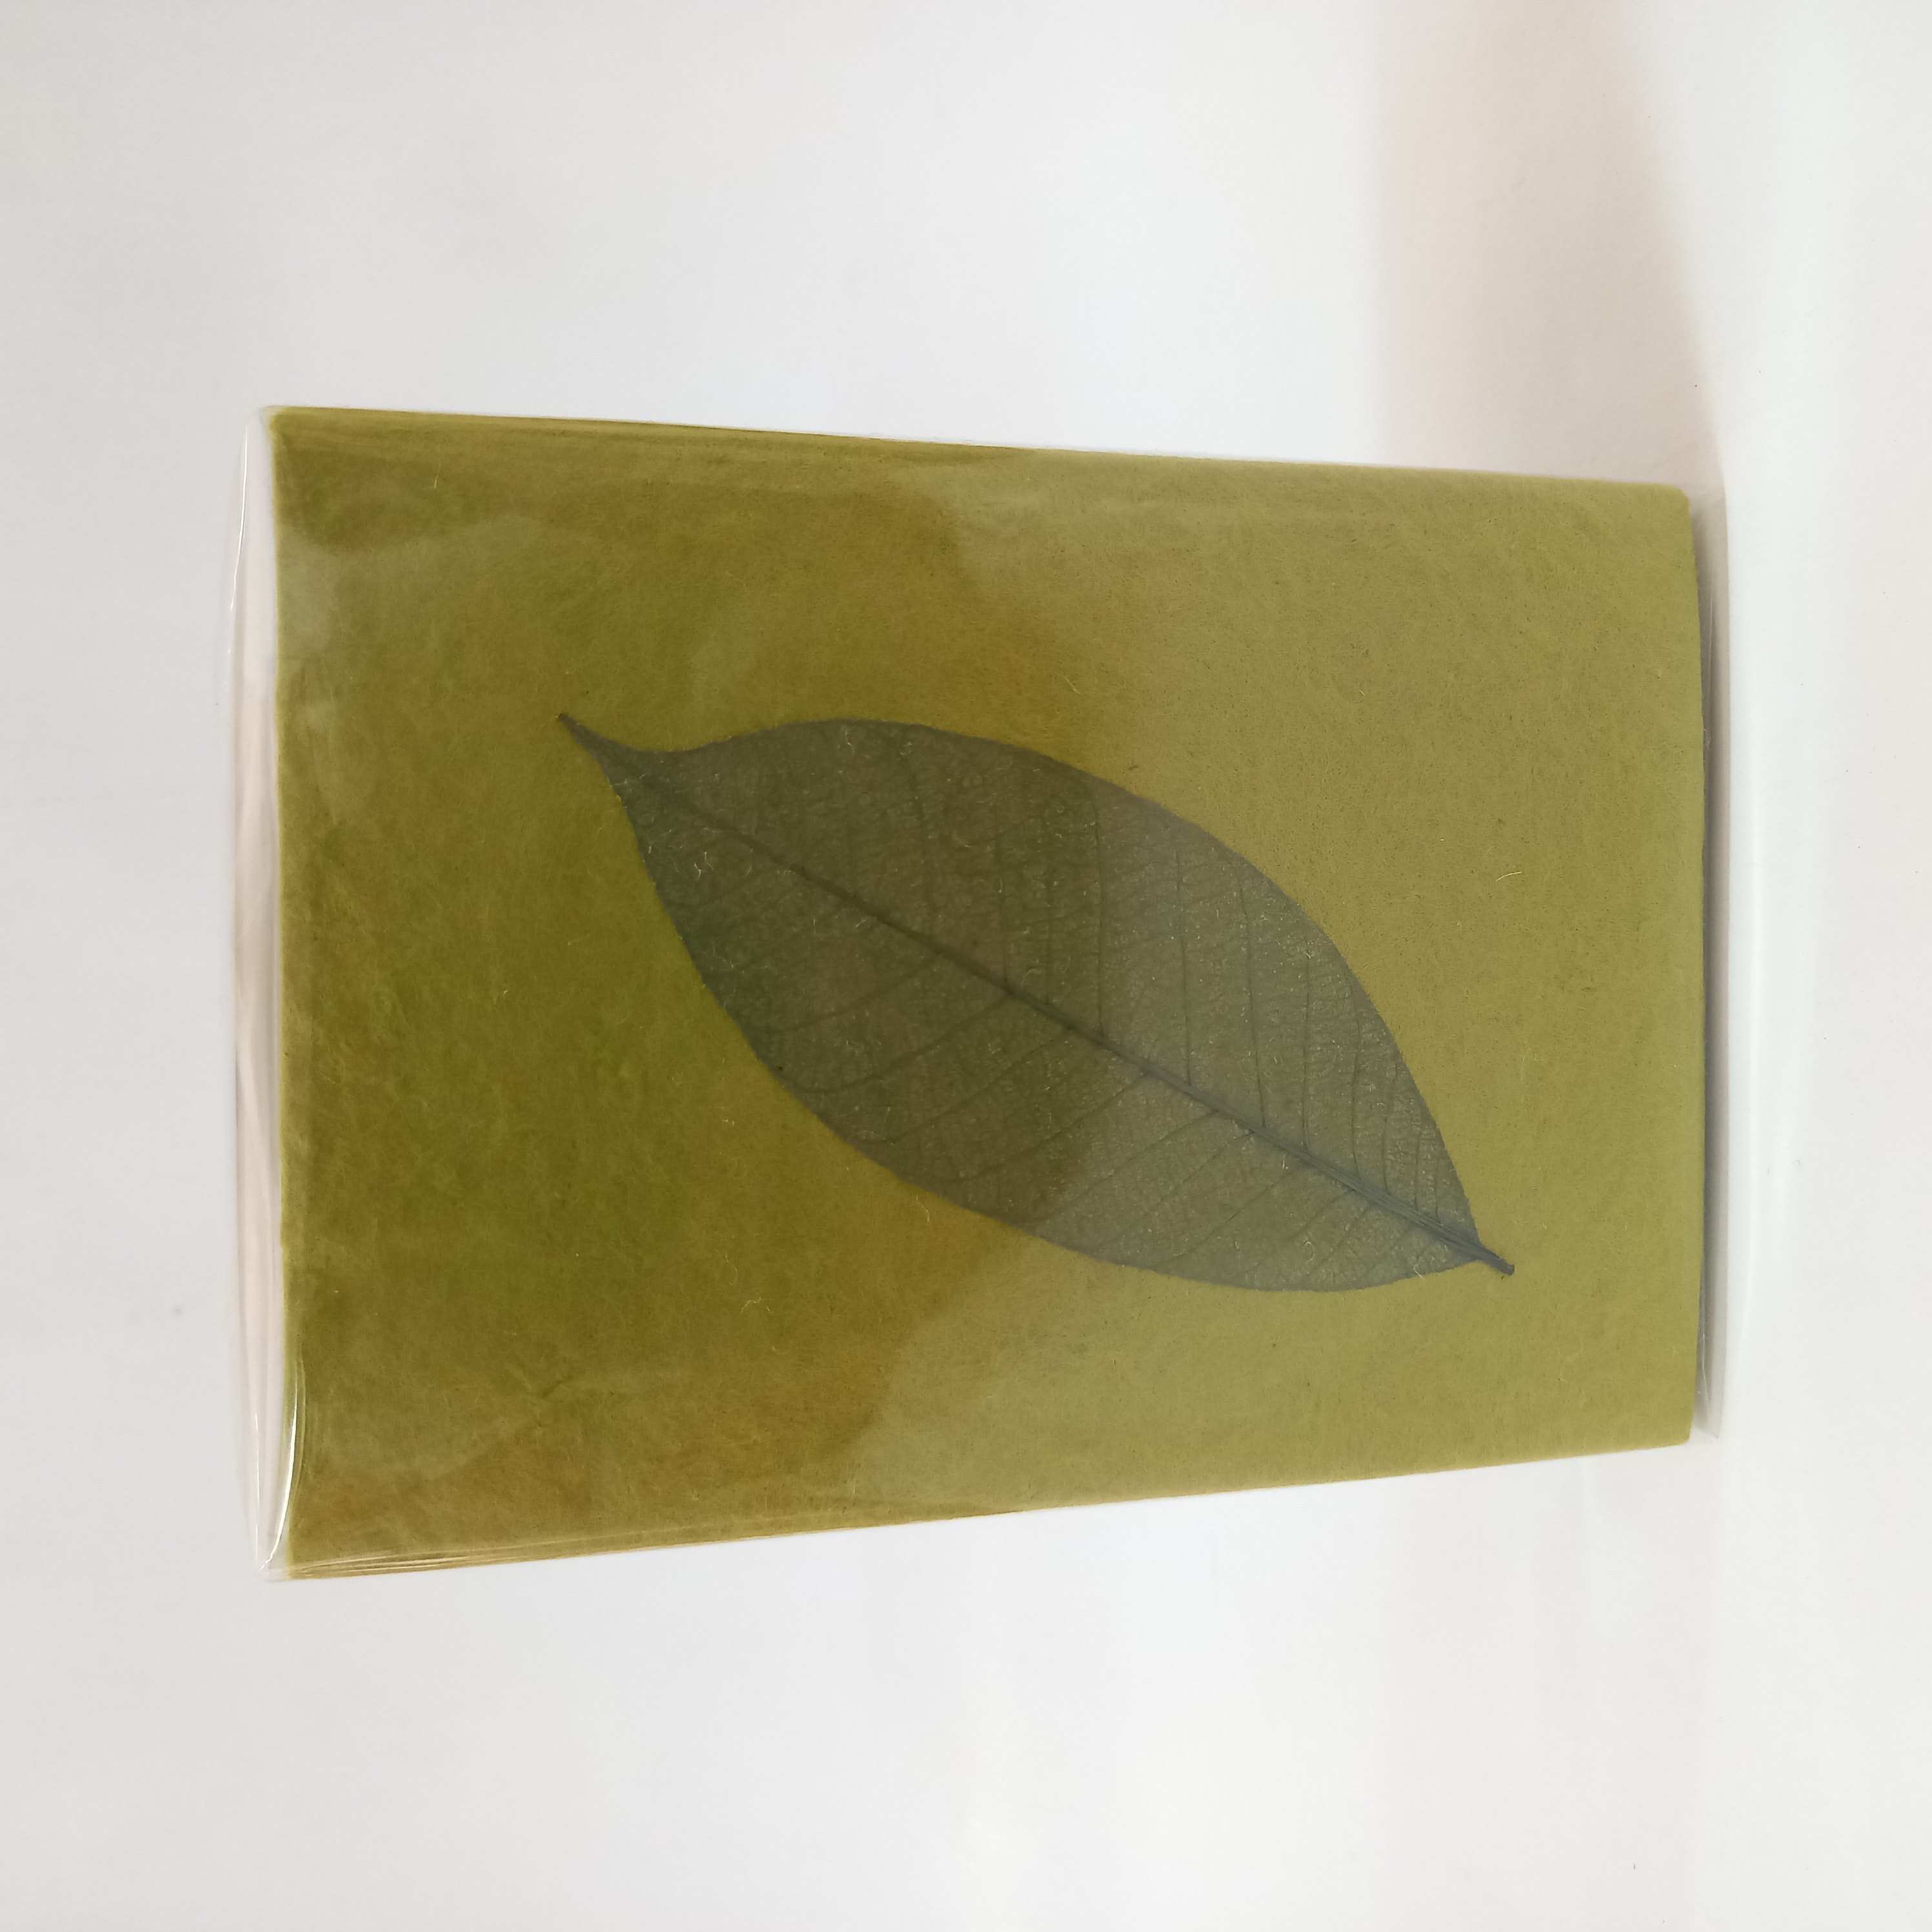 Paper bag olive size 16x11.5x5 cm